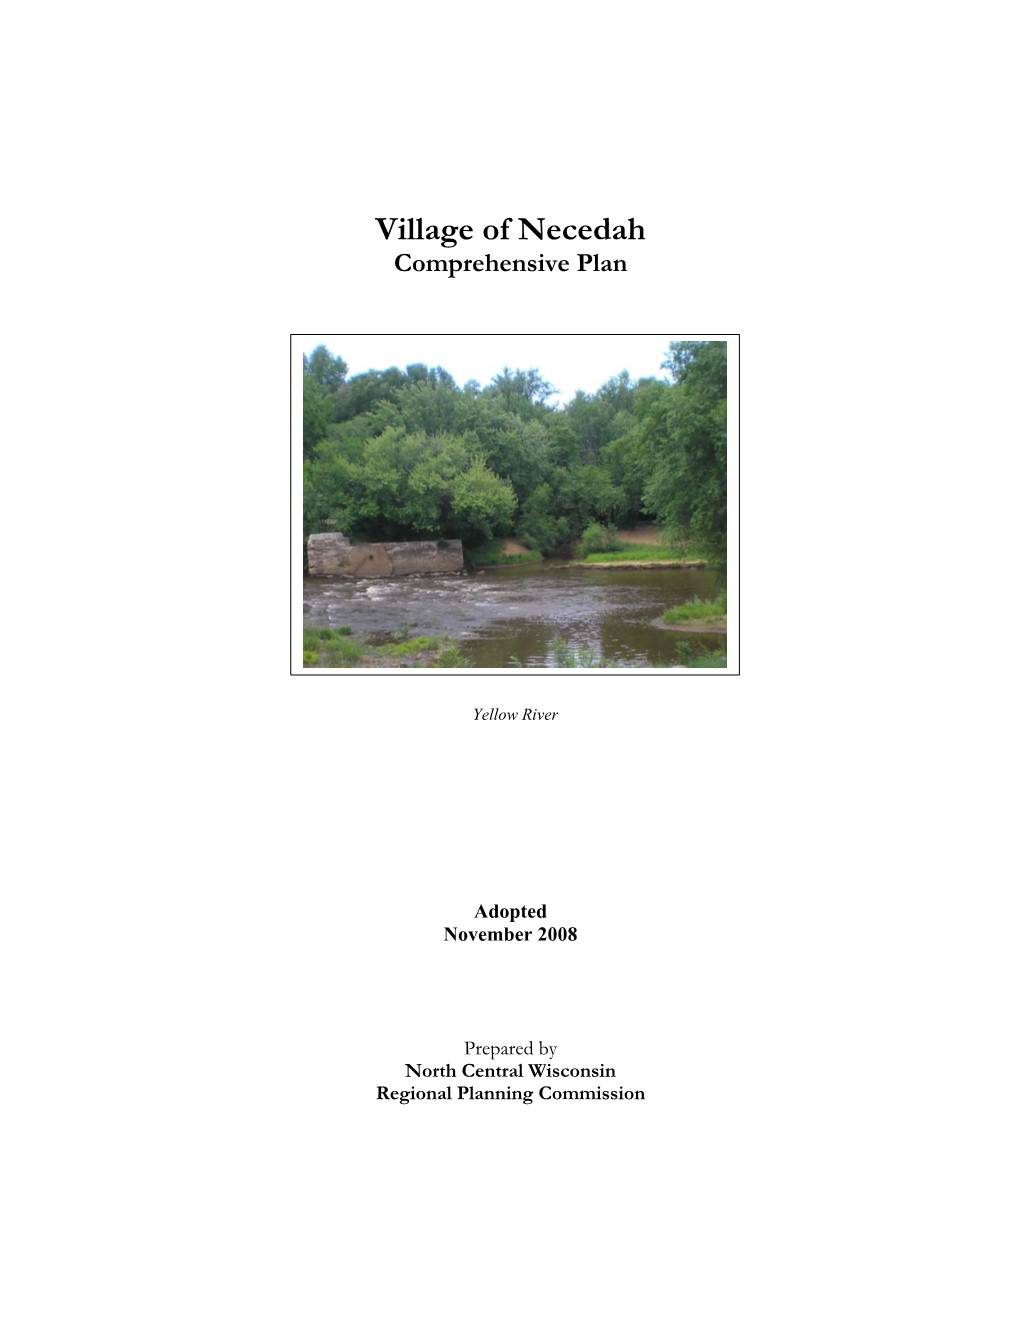 Village of Necedah Comprehensive Plan